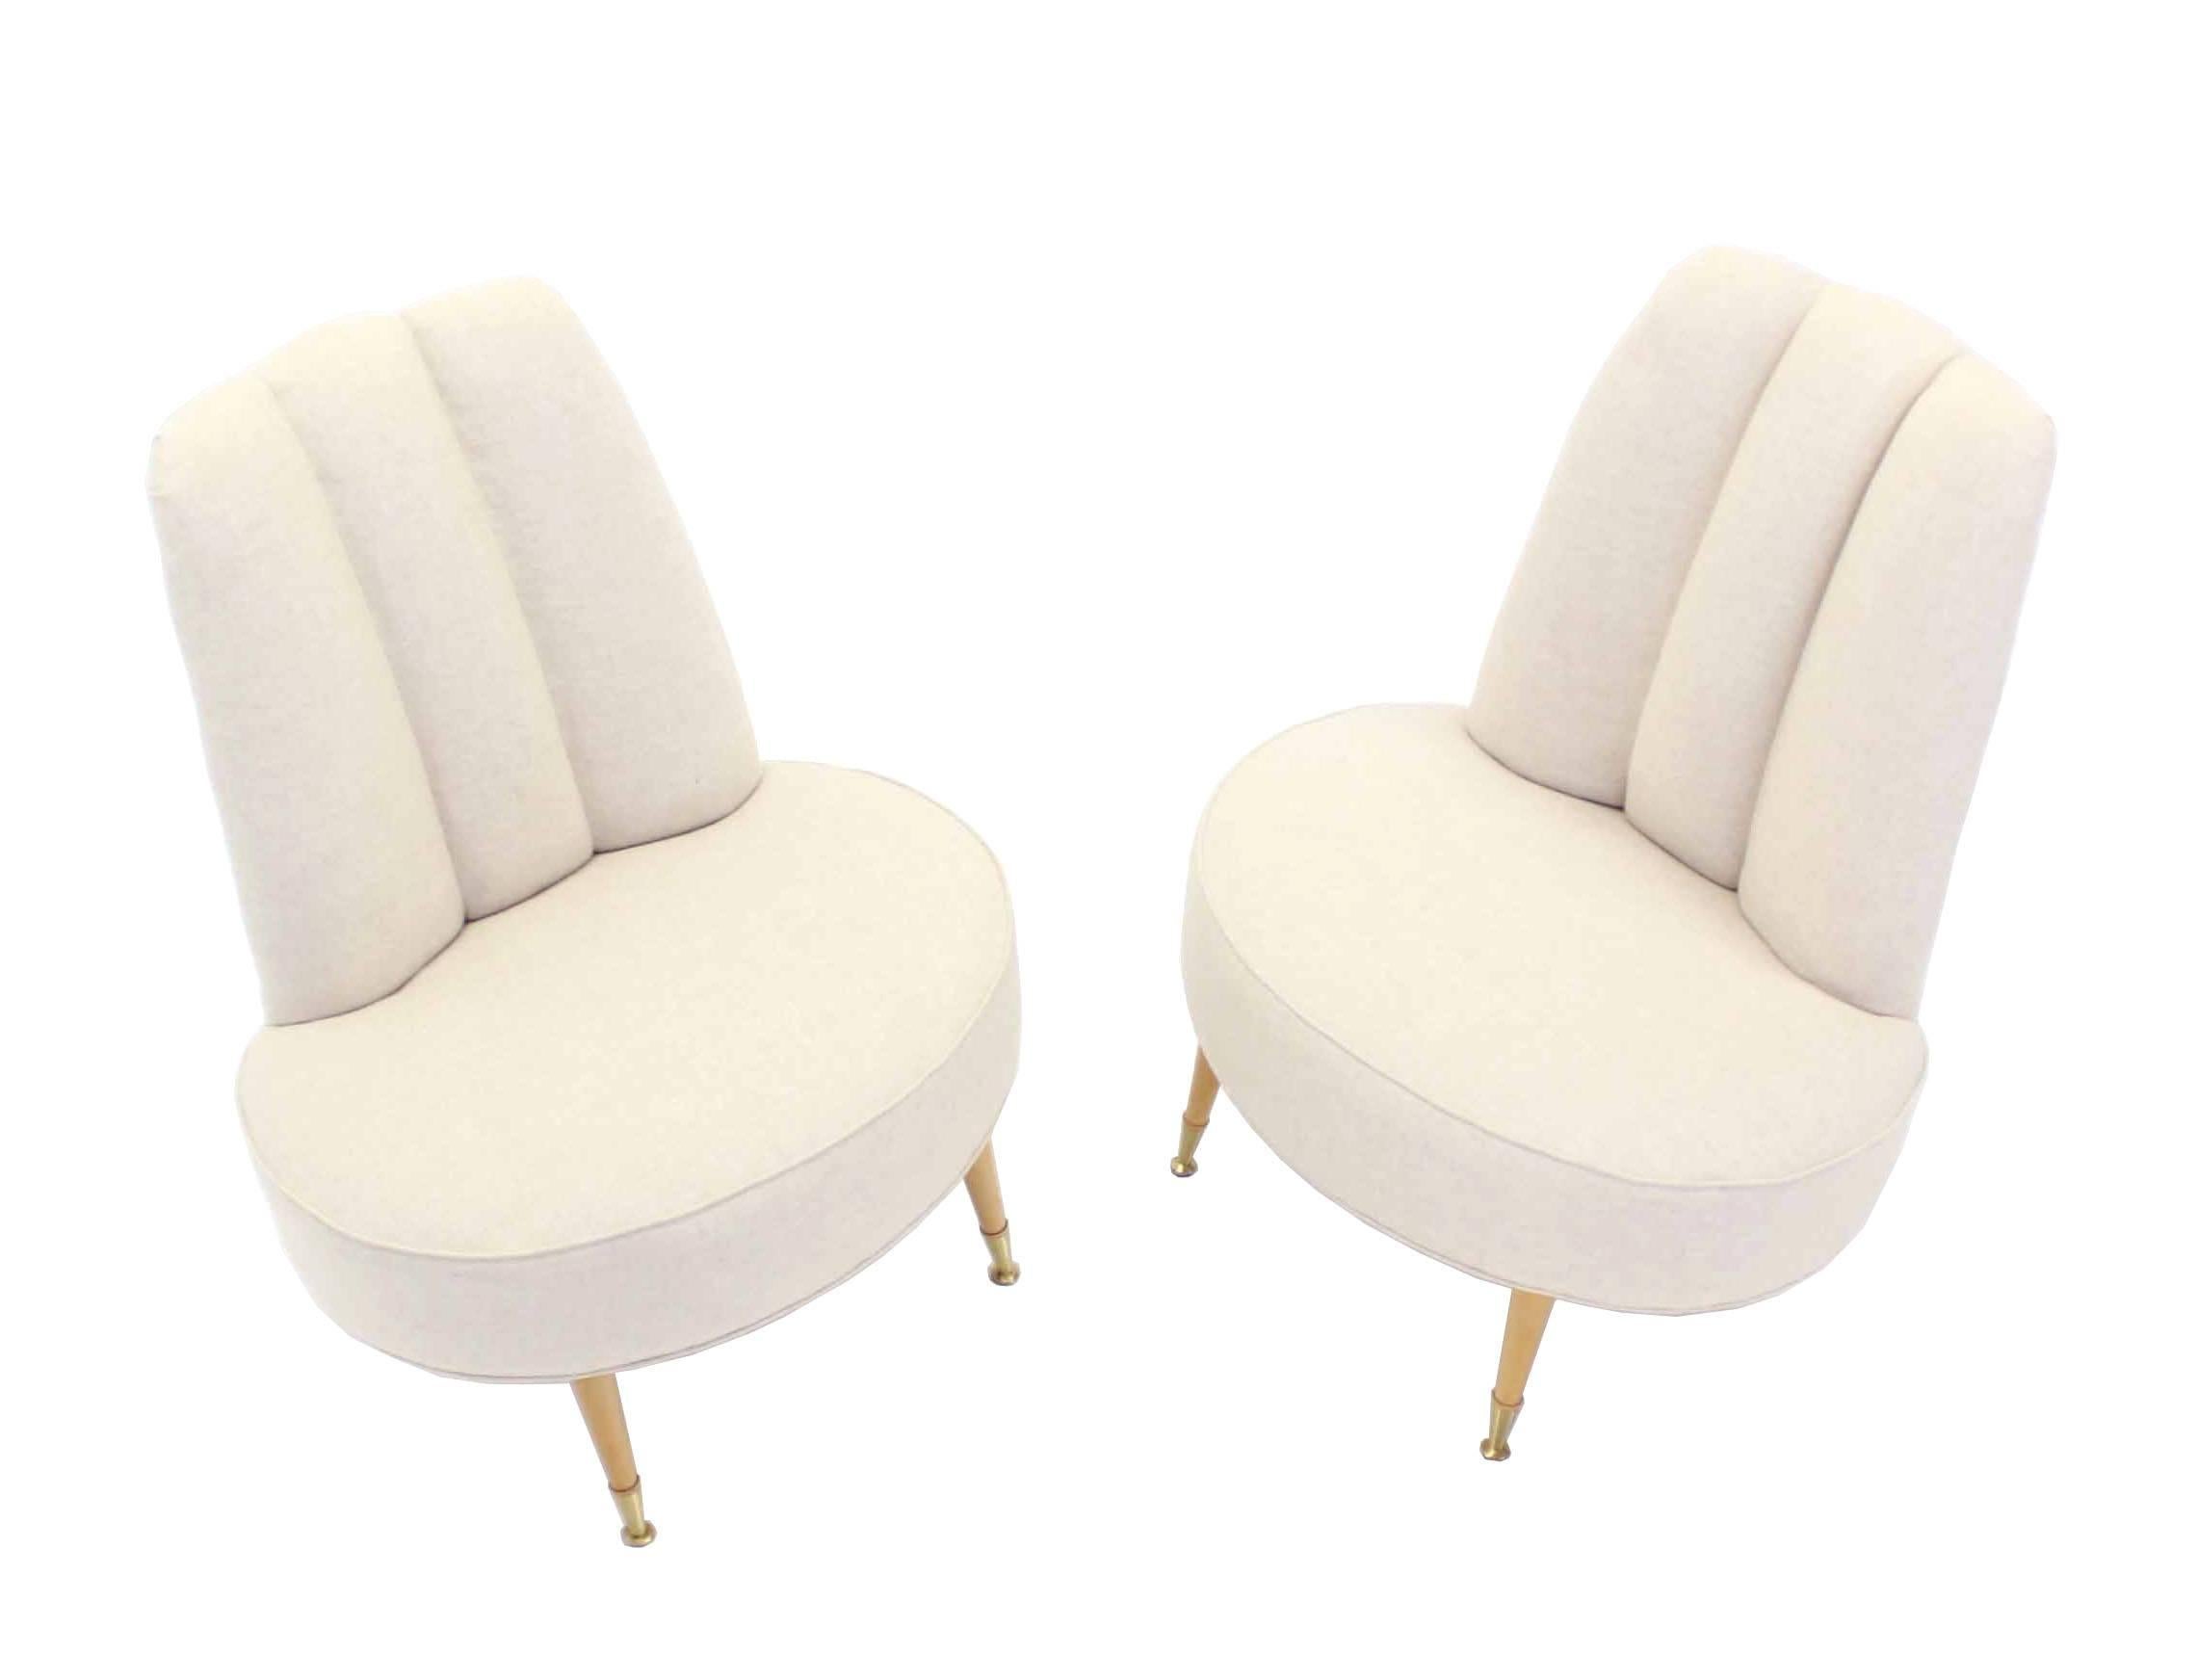 Very nice round seats mid century modern lounge slipper chairs